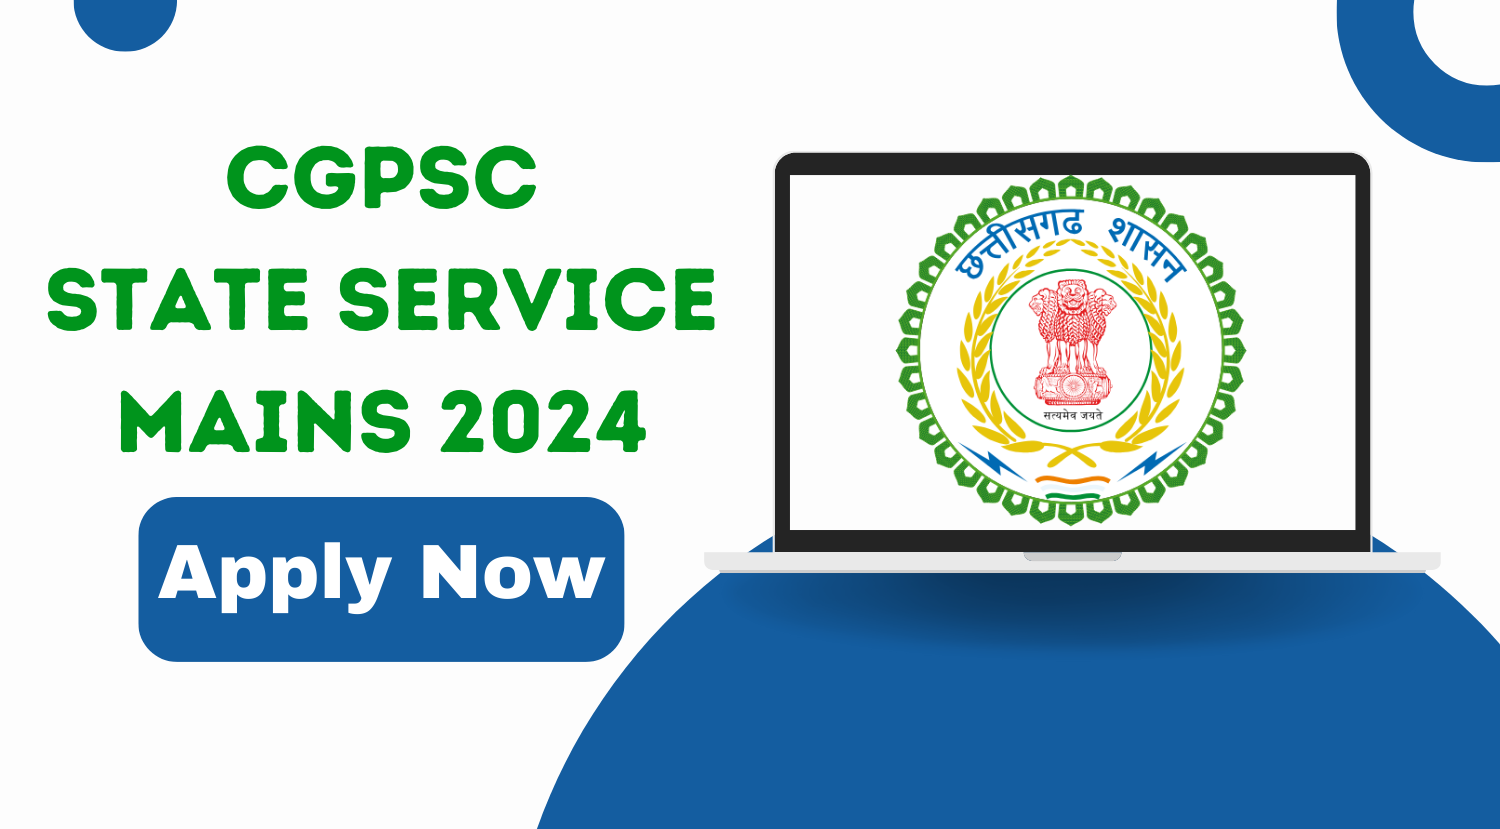 CGPSC State Service Mains 2024 Online Registration Begins